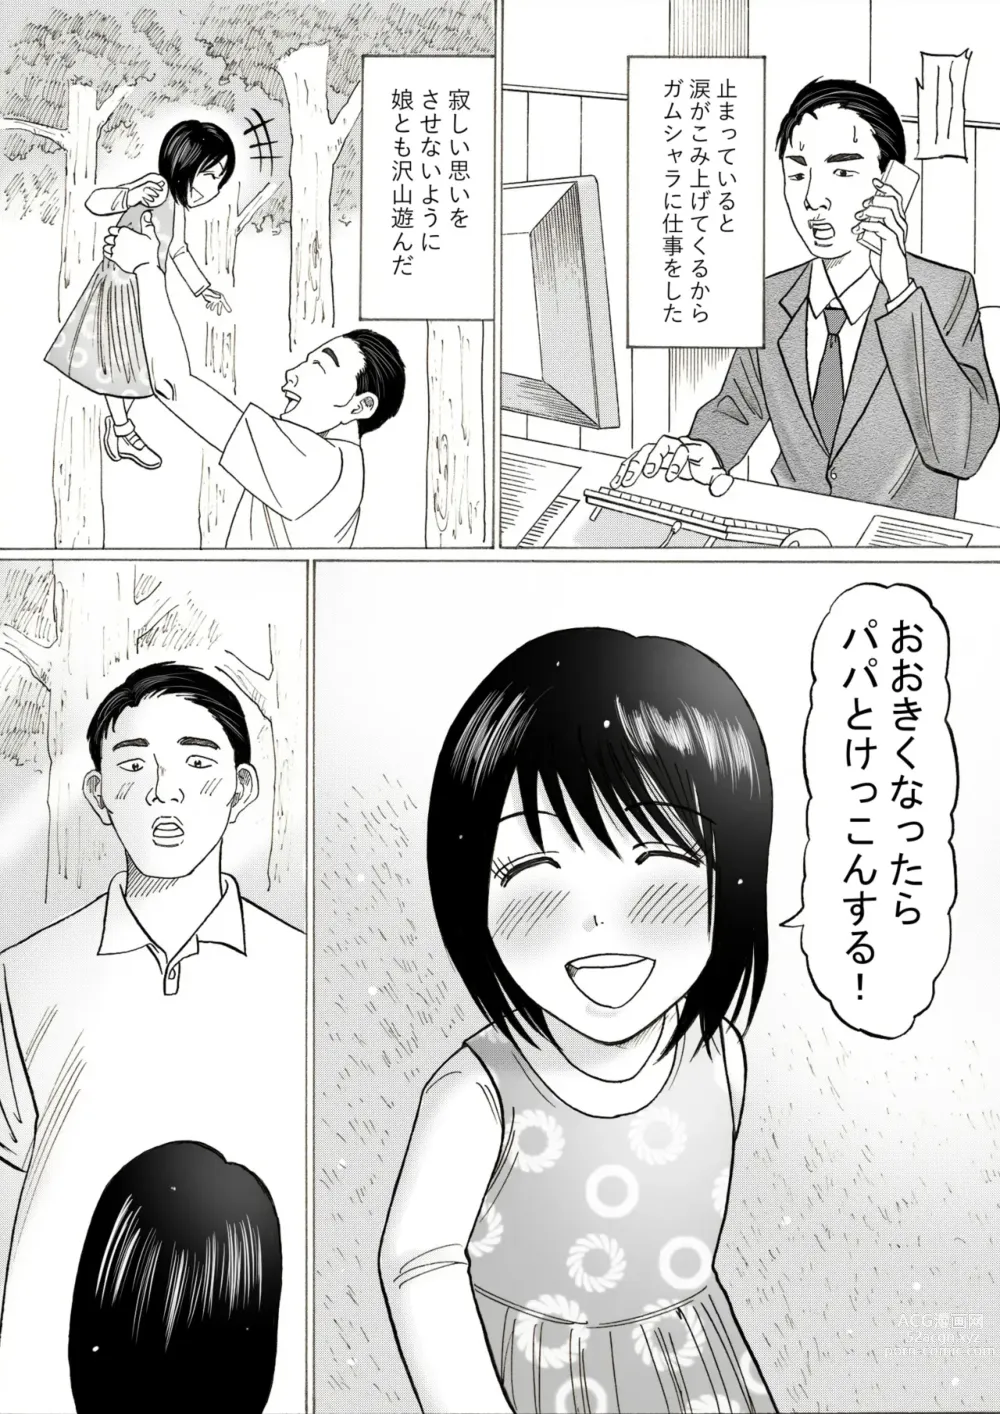 Page 3 of doujinshi Risato